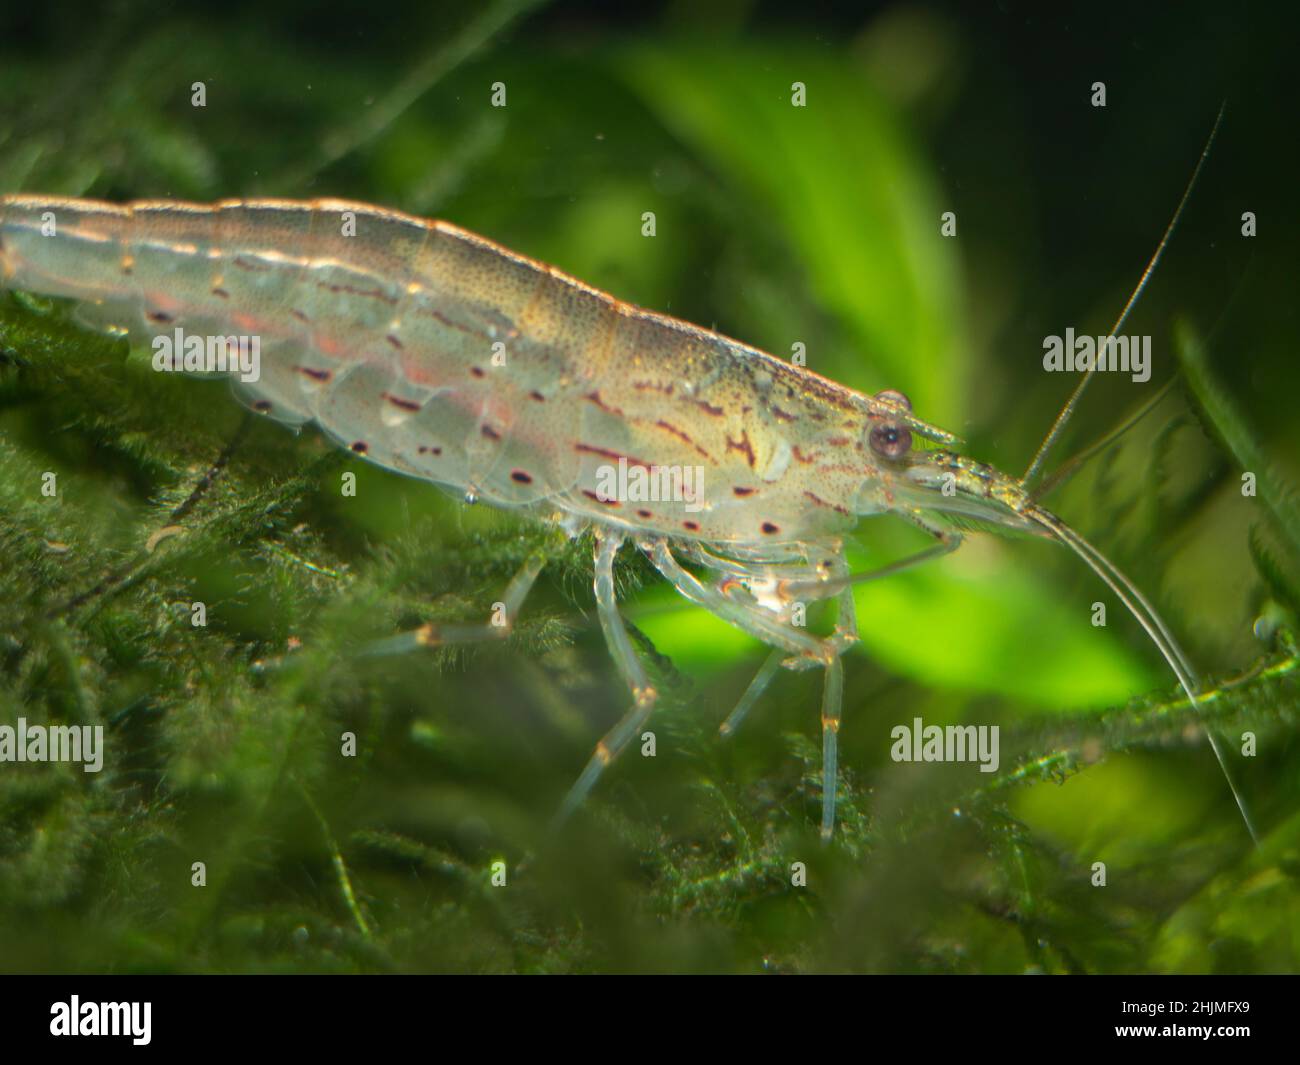 Yamato shrimp on java moss  Stock Photo